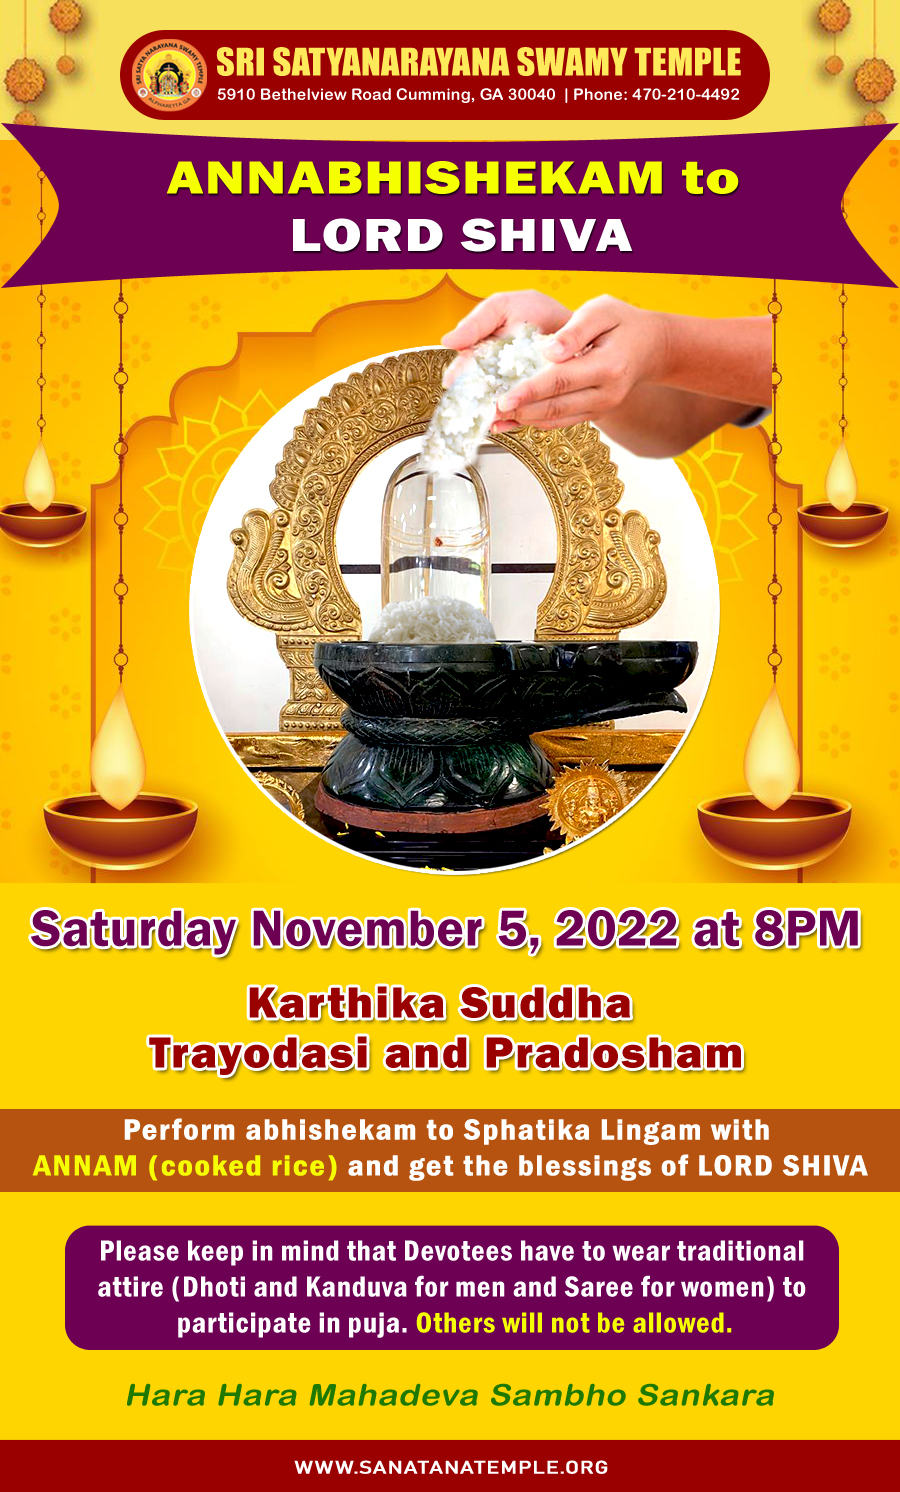 Annabhishekam to  Lord Shiva on Saturday Nov. 5th at 8PM